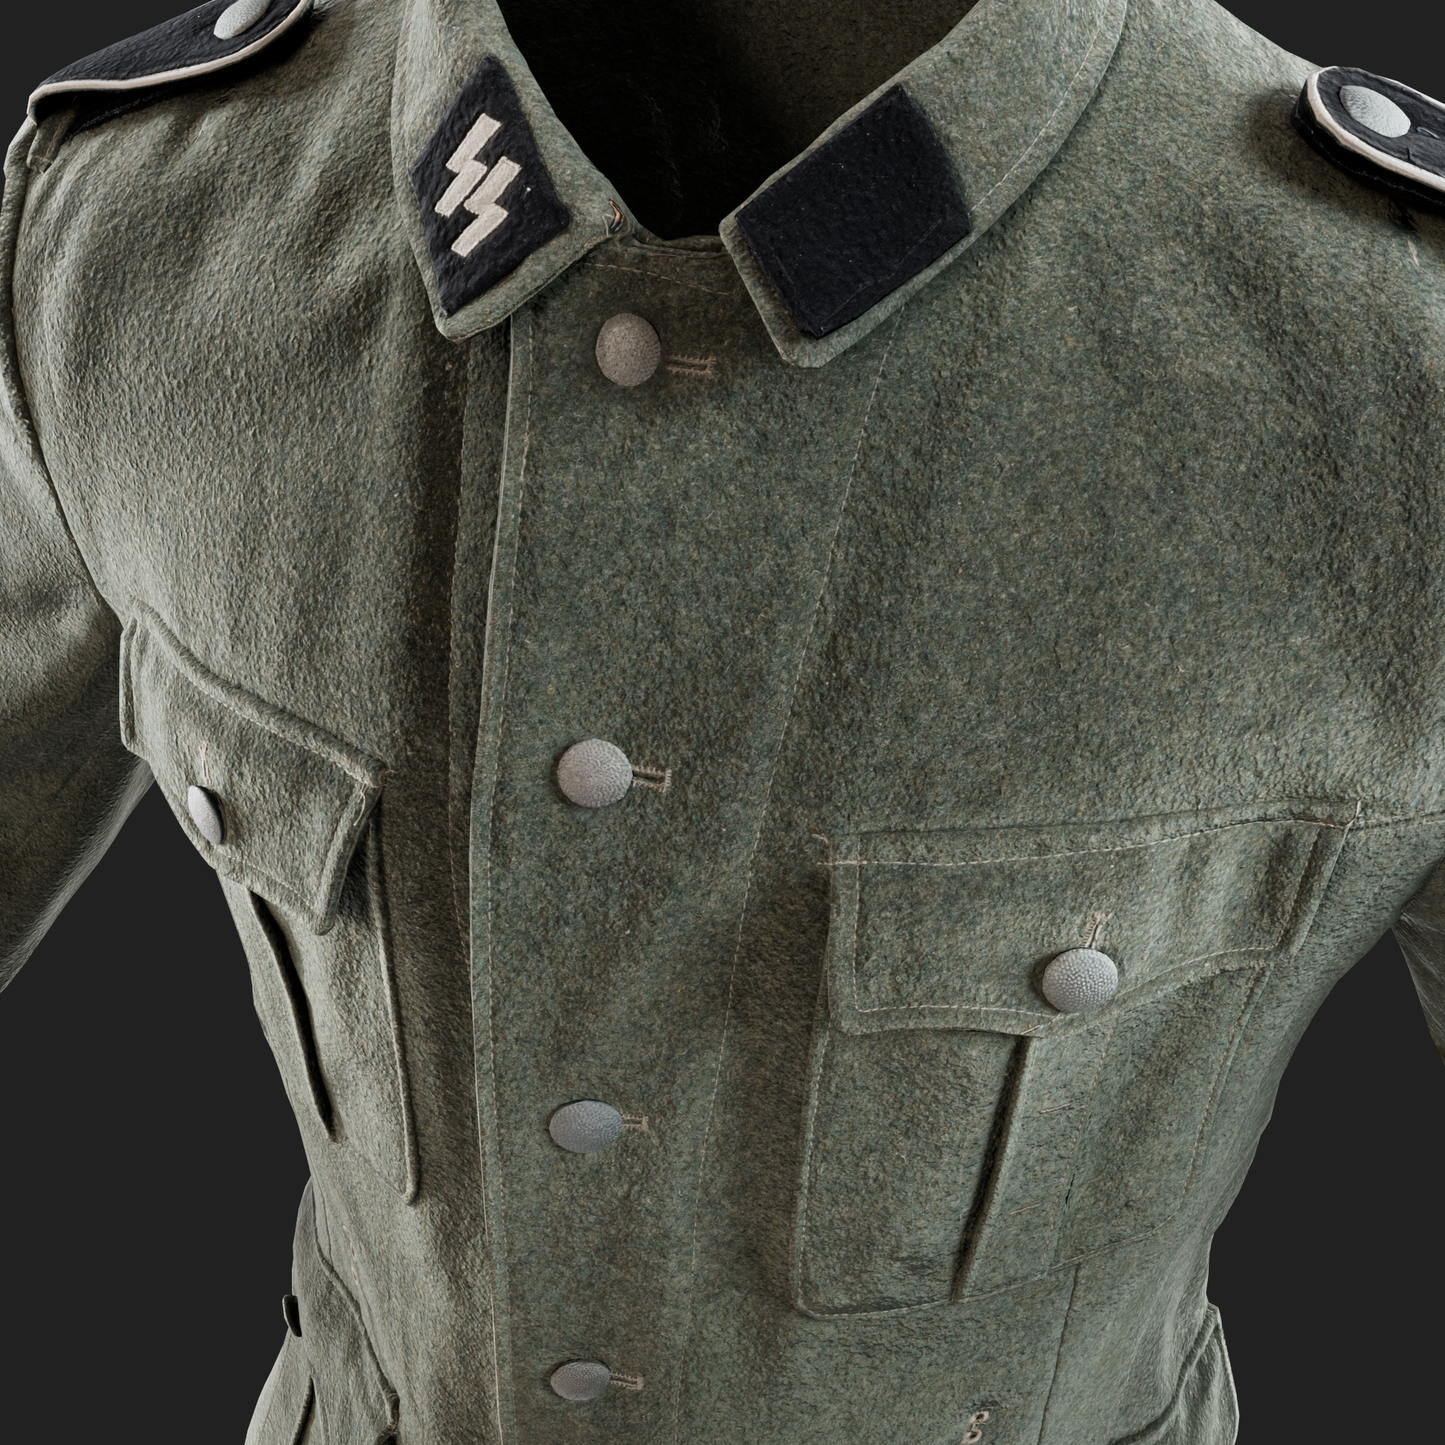 Men's German M40 Feldgrau Jacket